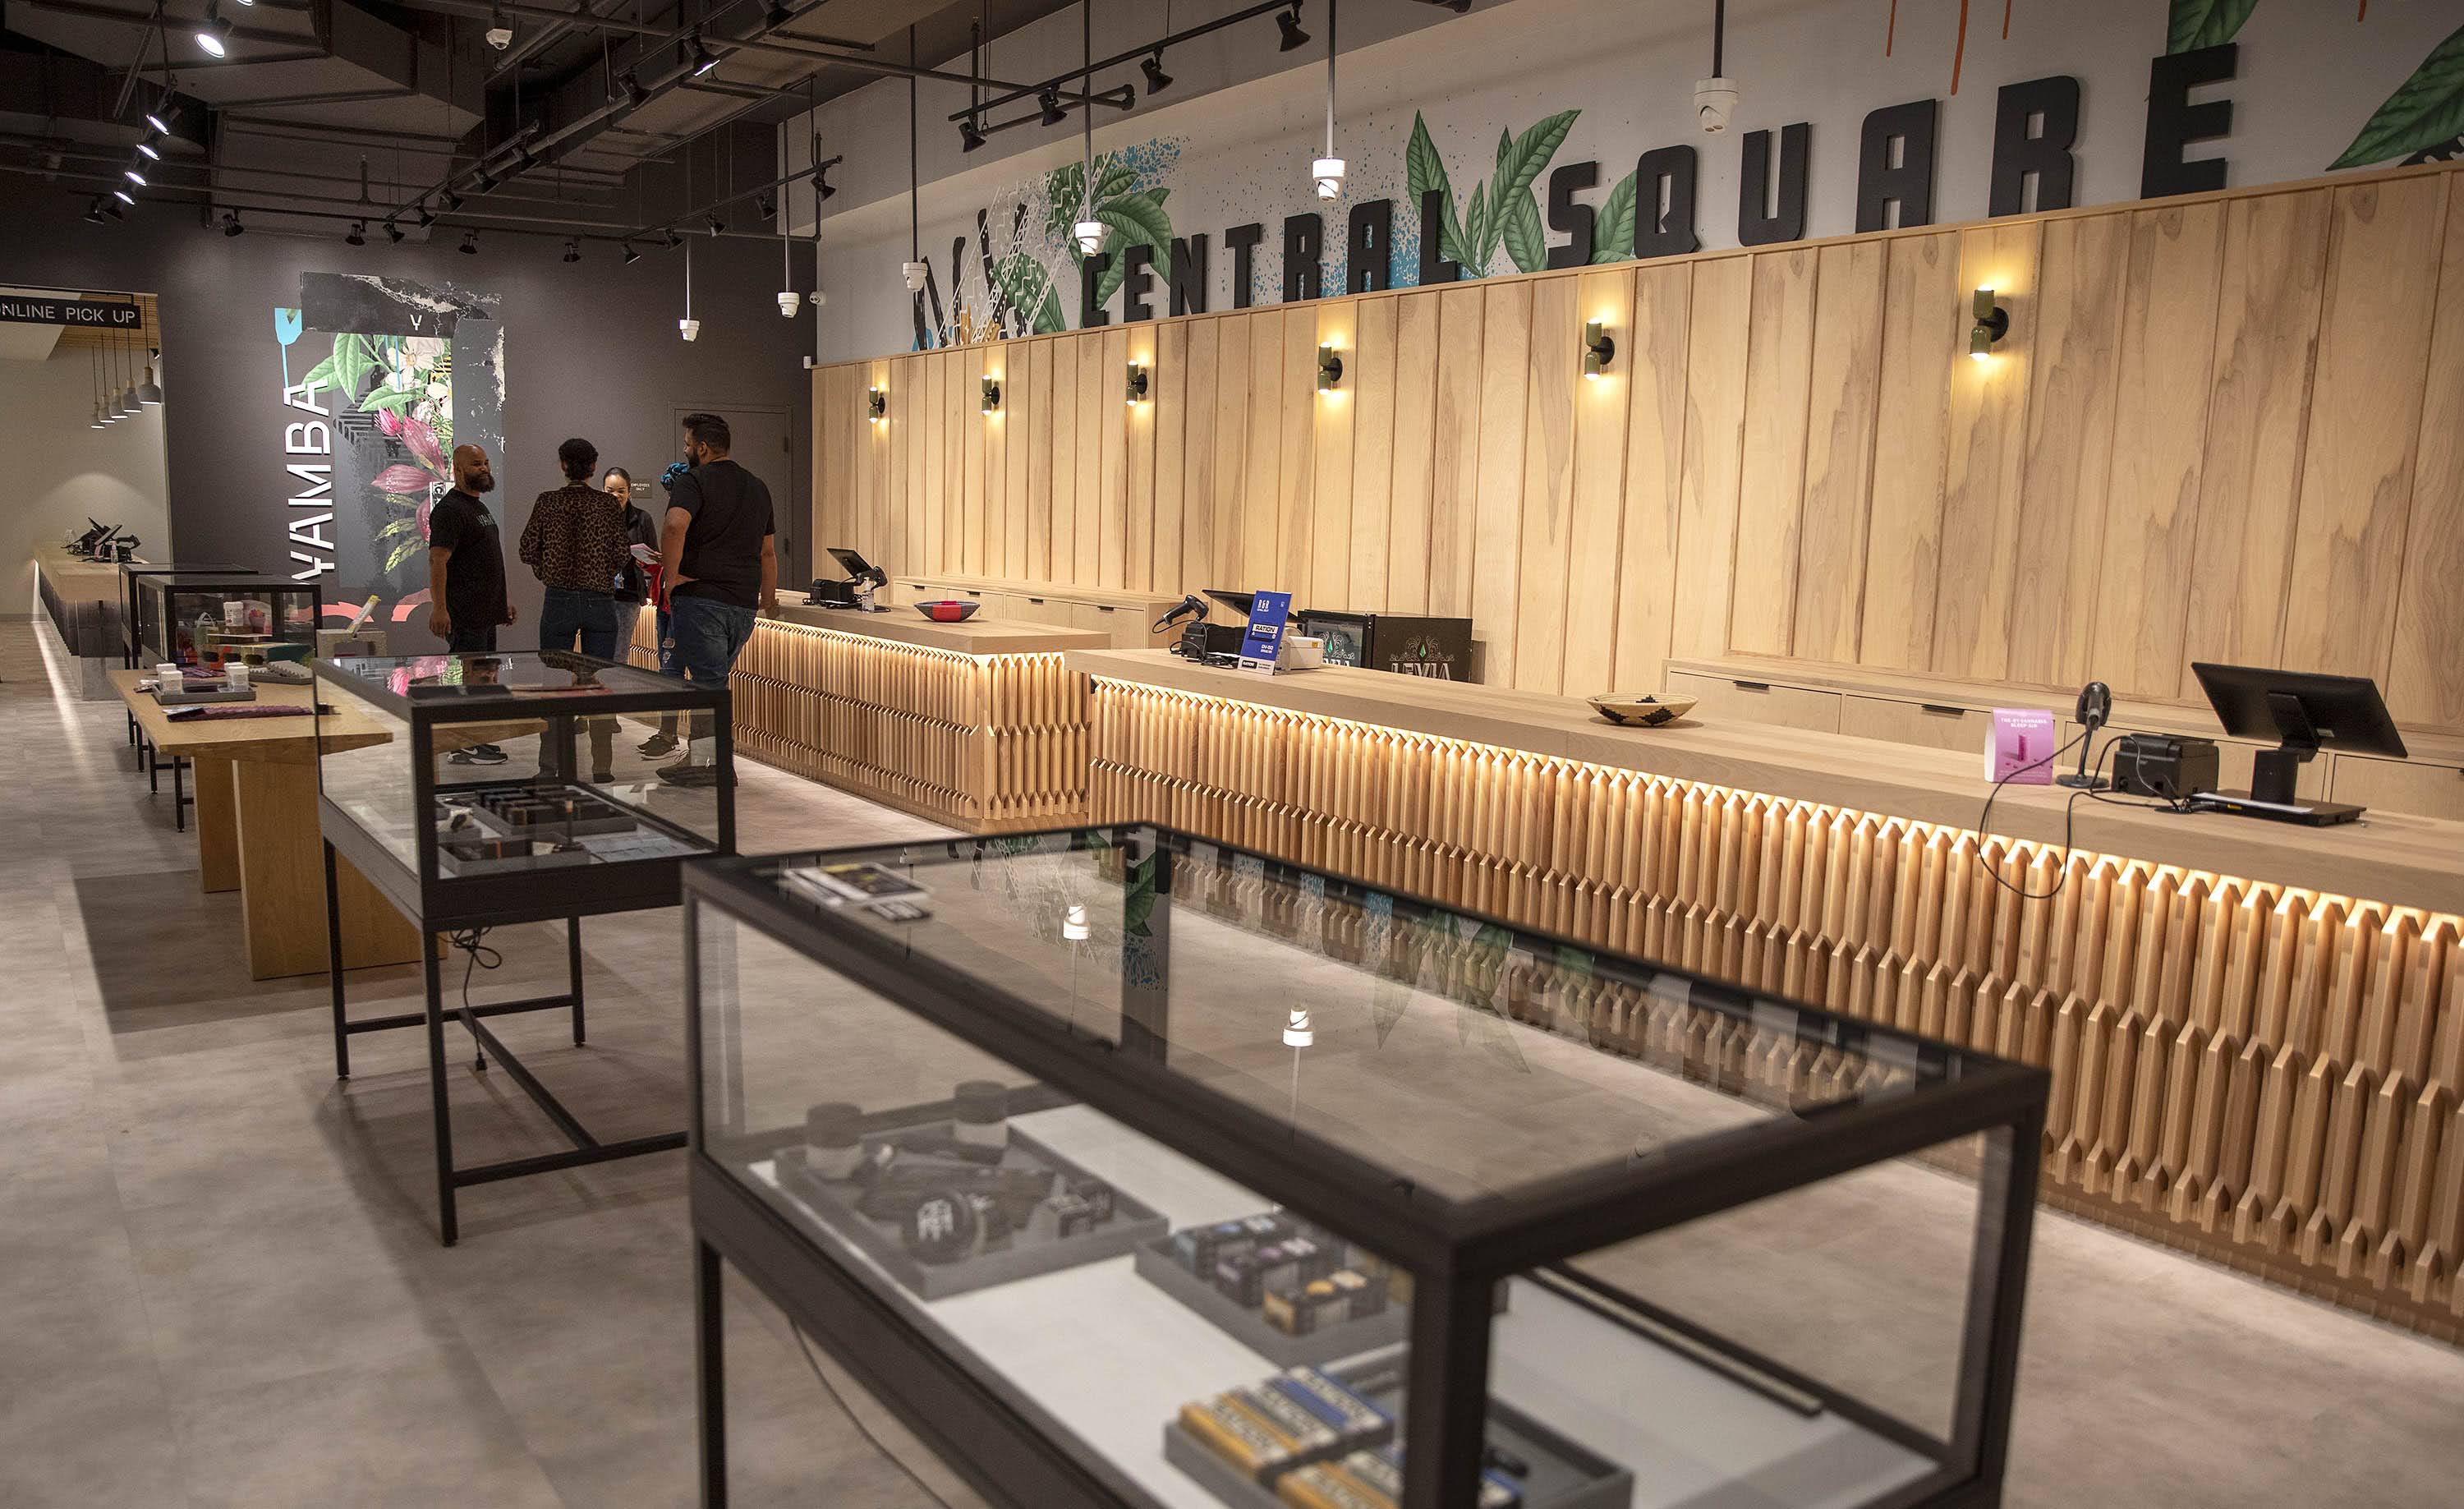 Cambridge gets its first recreational marijuana shop | WBUR News